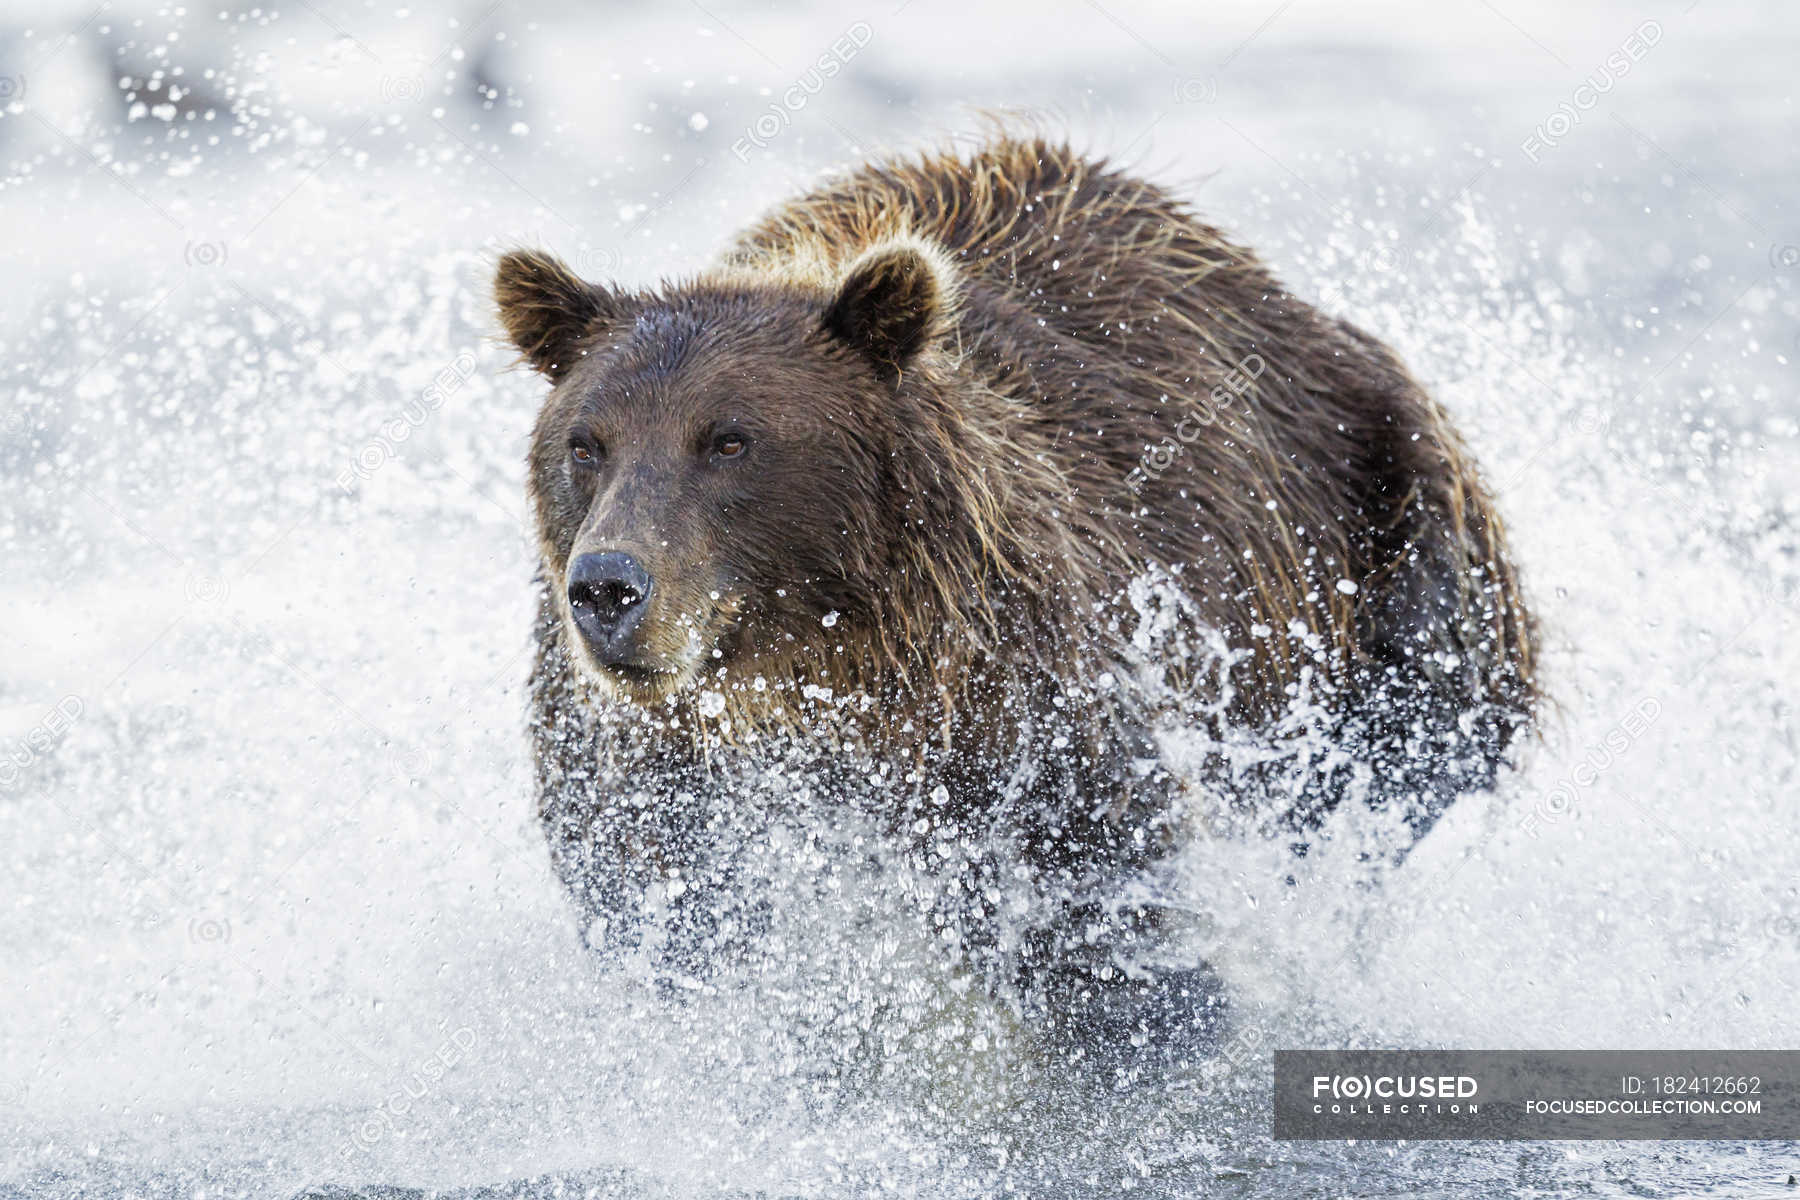 Бурый медведь скорость бега км ч. Беар Браун Аляска. Медведь бежит. Бурый медведь бежит. Медведь убегает.